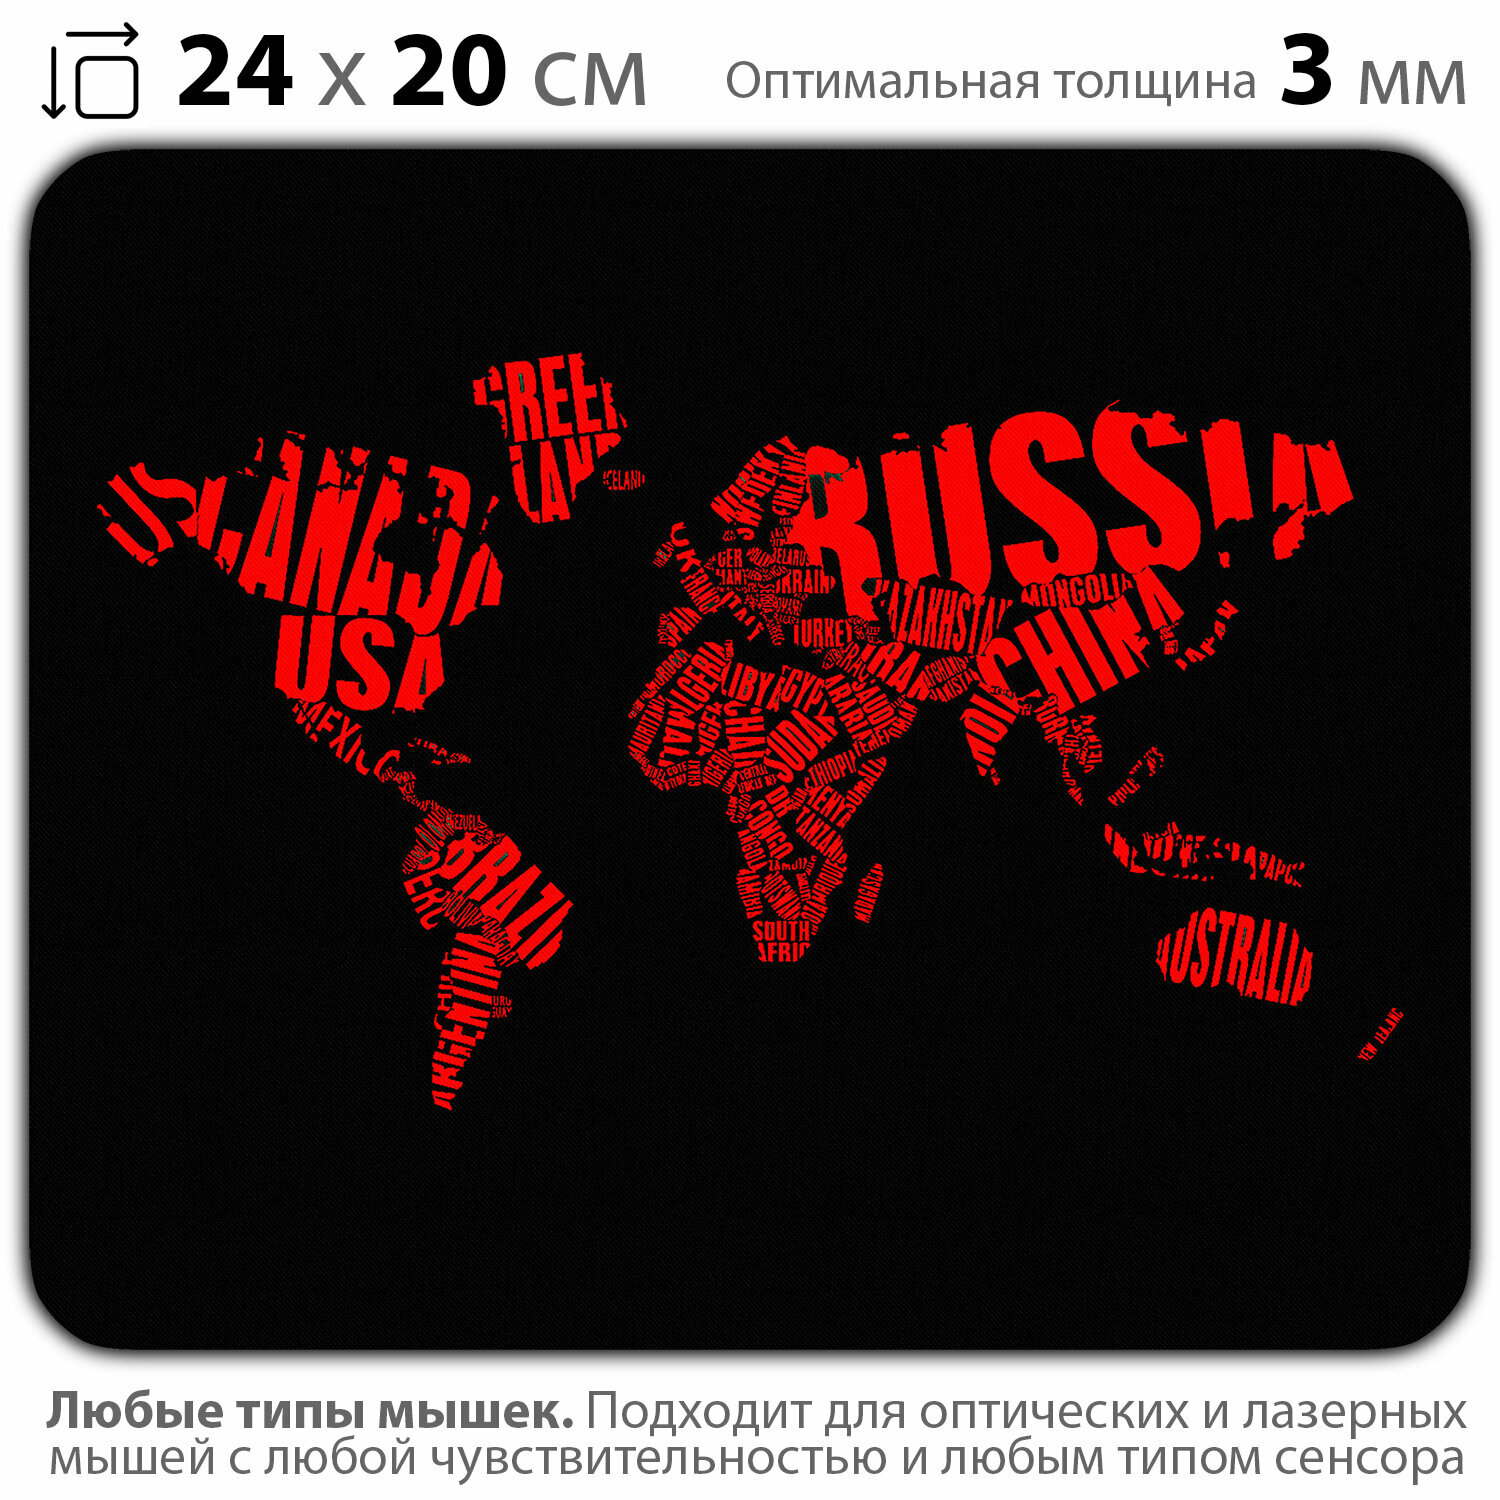 Коврик для мыши "Карта мира из букв" (24 x 20 см x 3 мм)